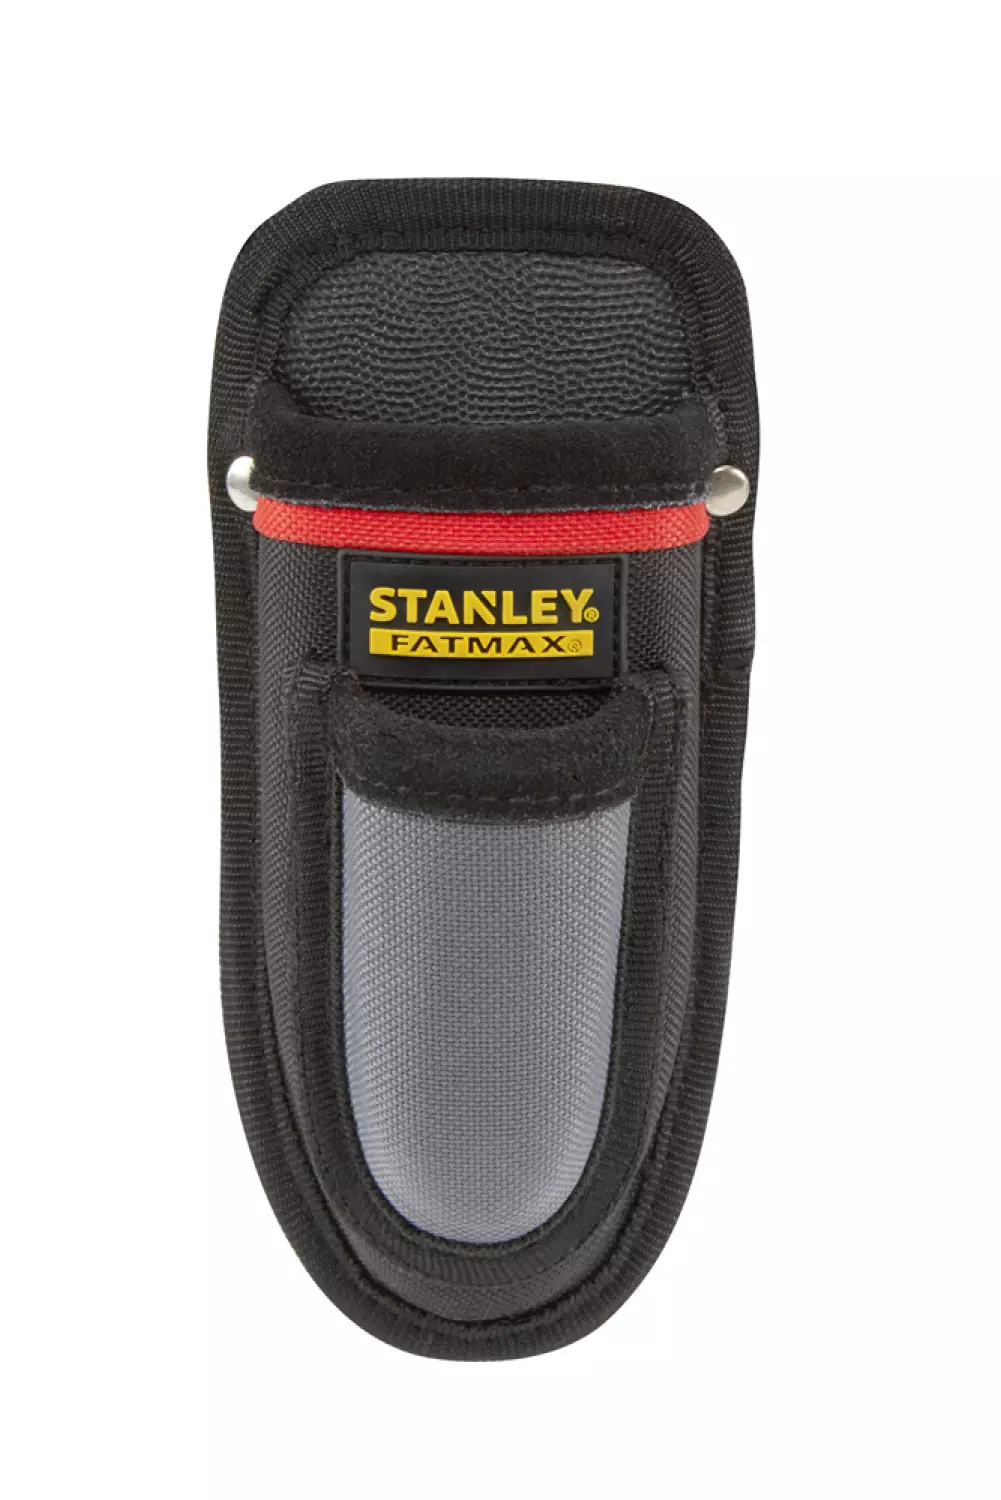 Stanley 0-10-028 FatMax mesholster-image